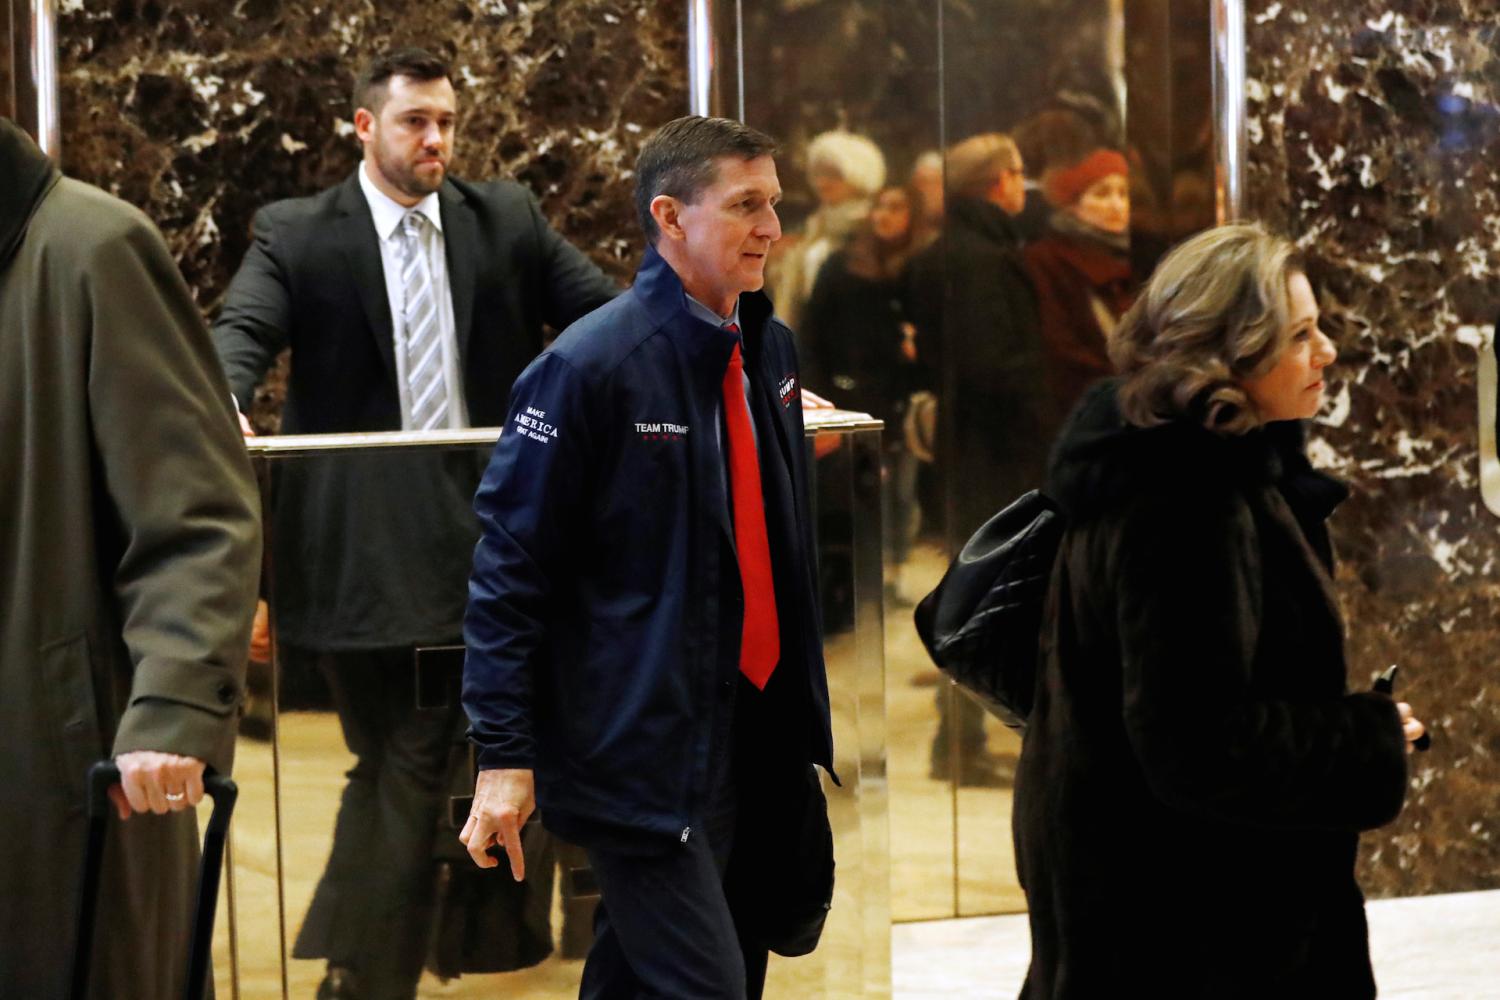 Retired U.S. Army Lieutenant General Michael Flynn leaves Trump Tower in New York, U.S., December 10, 2016. REUTERS/Mark Kauzlarich - RTX2UFOV